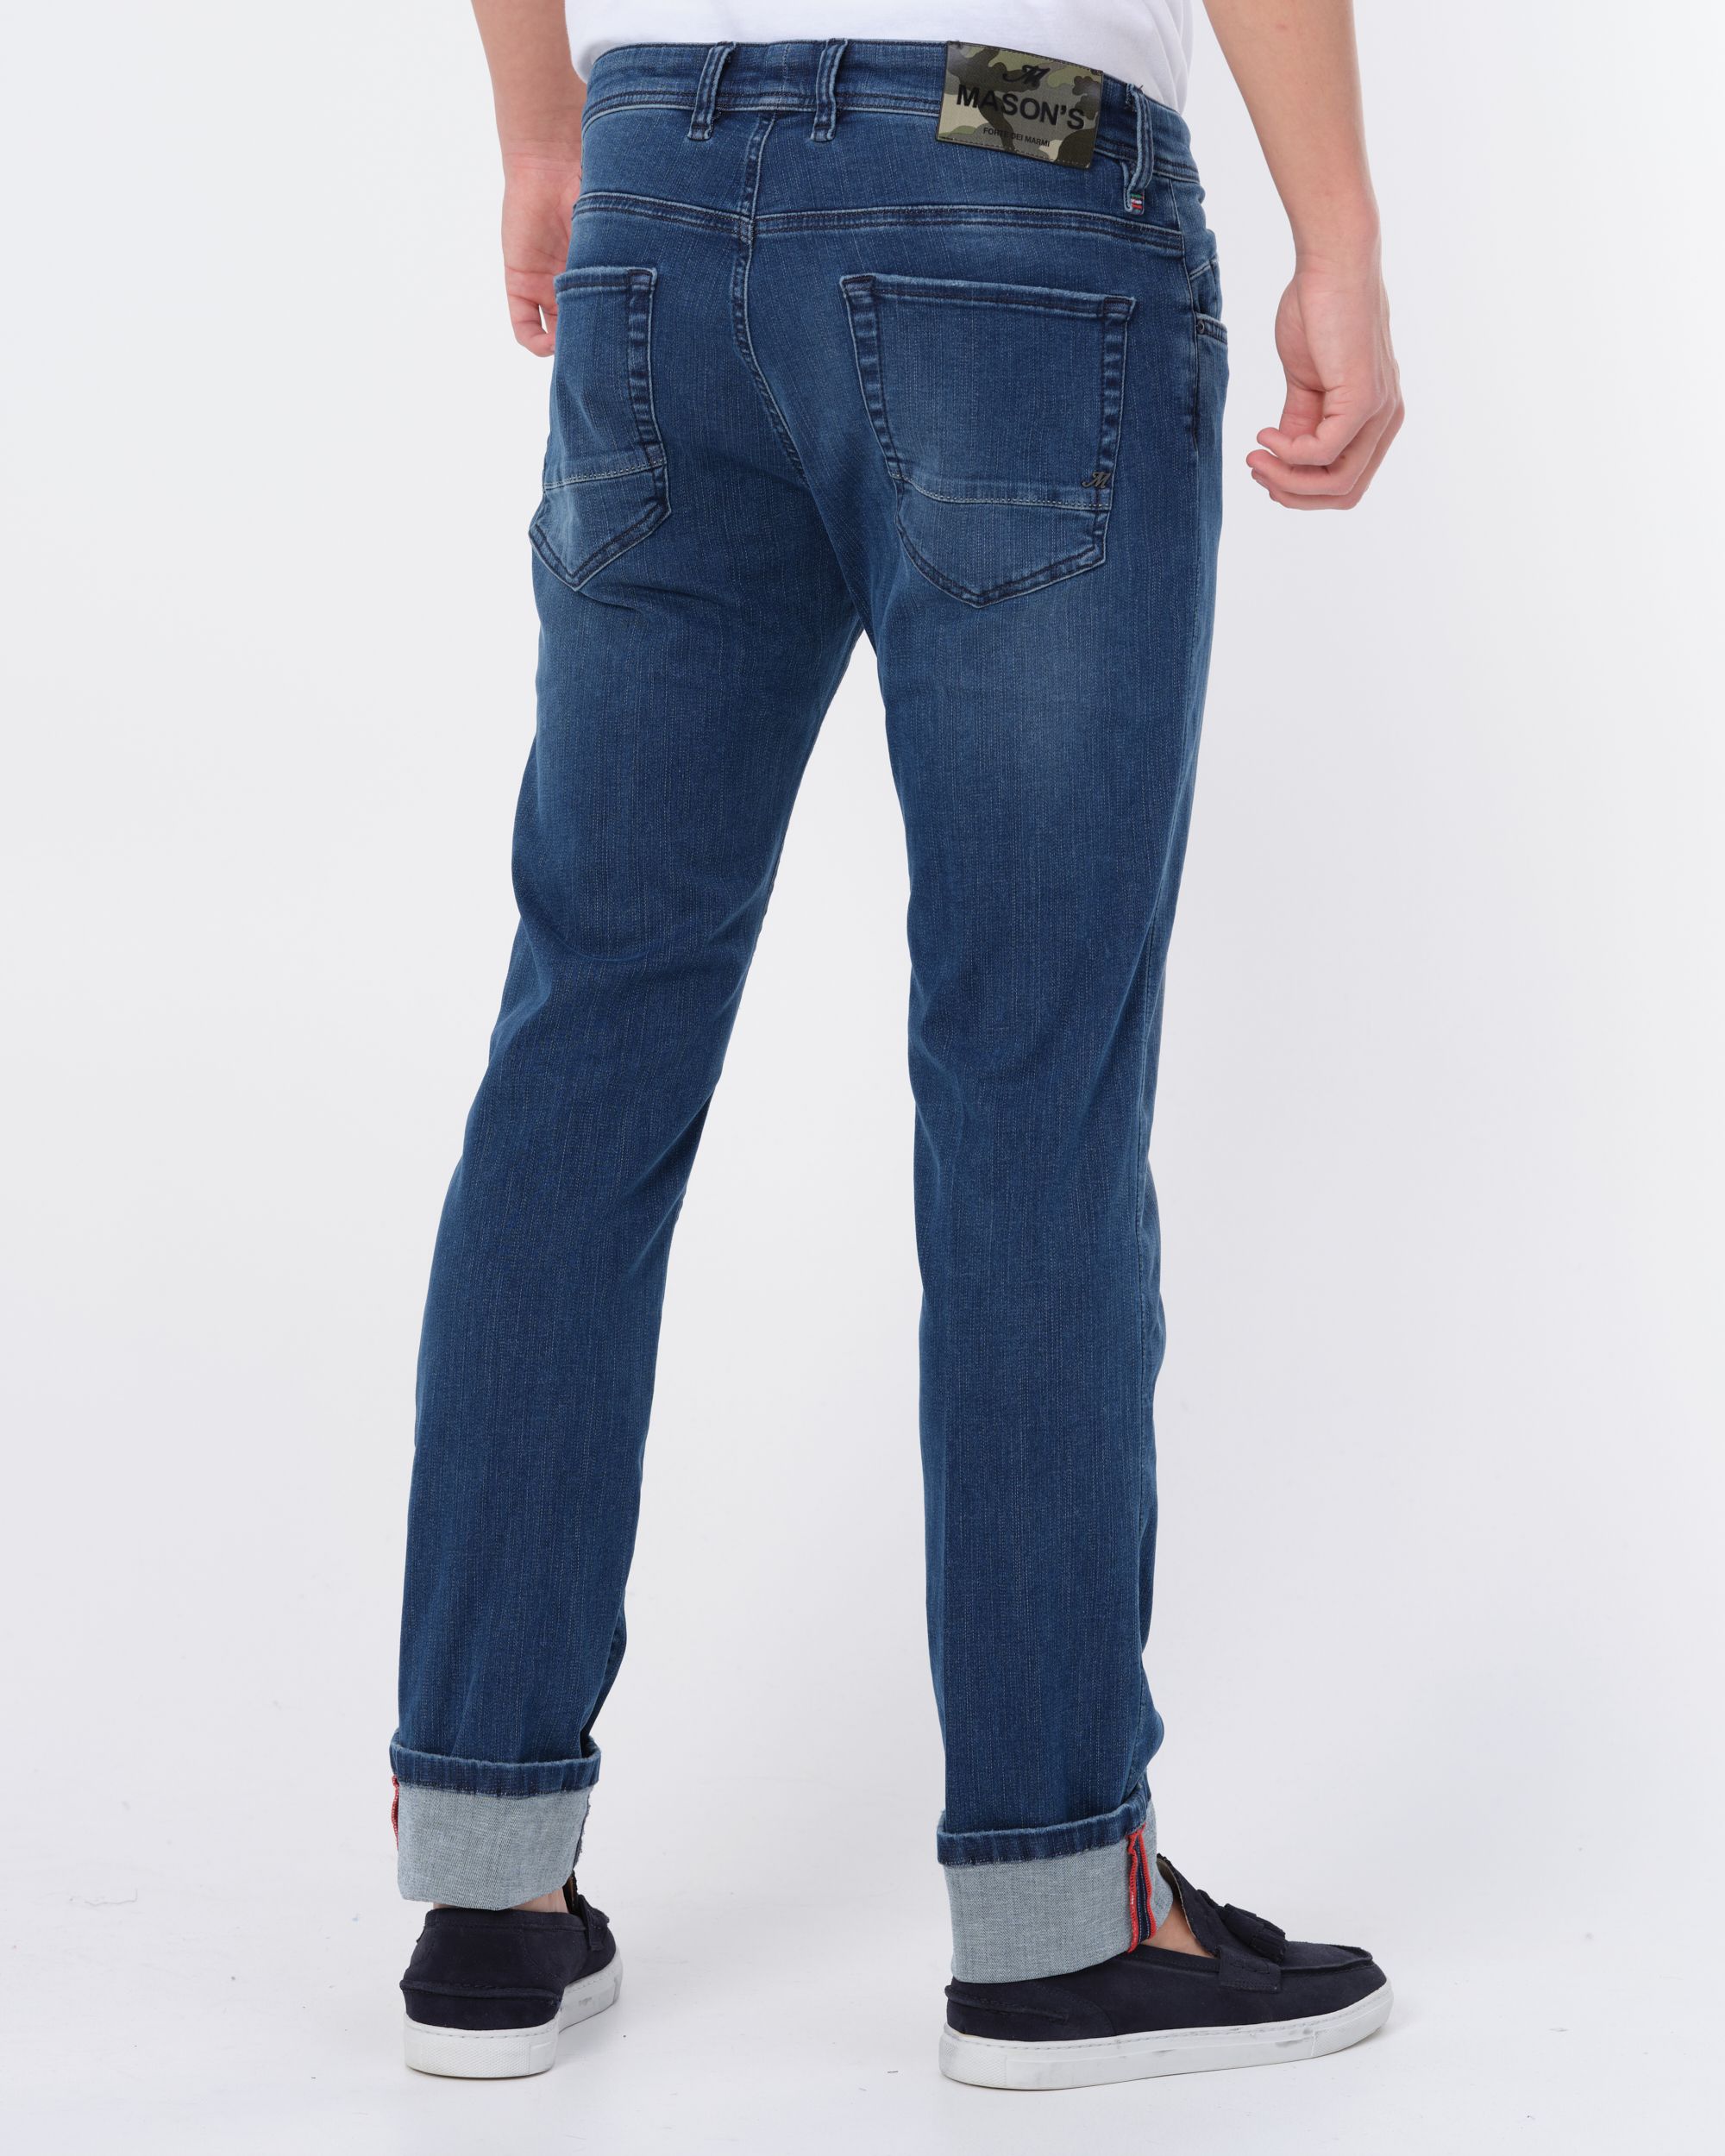 Mason's Jeans Donker blauw 083825-001-31